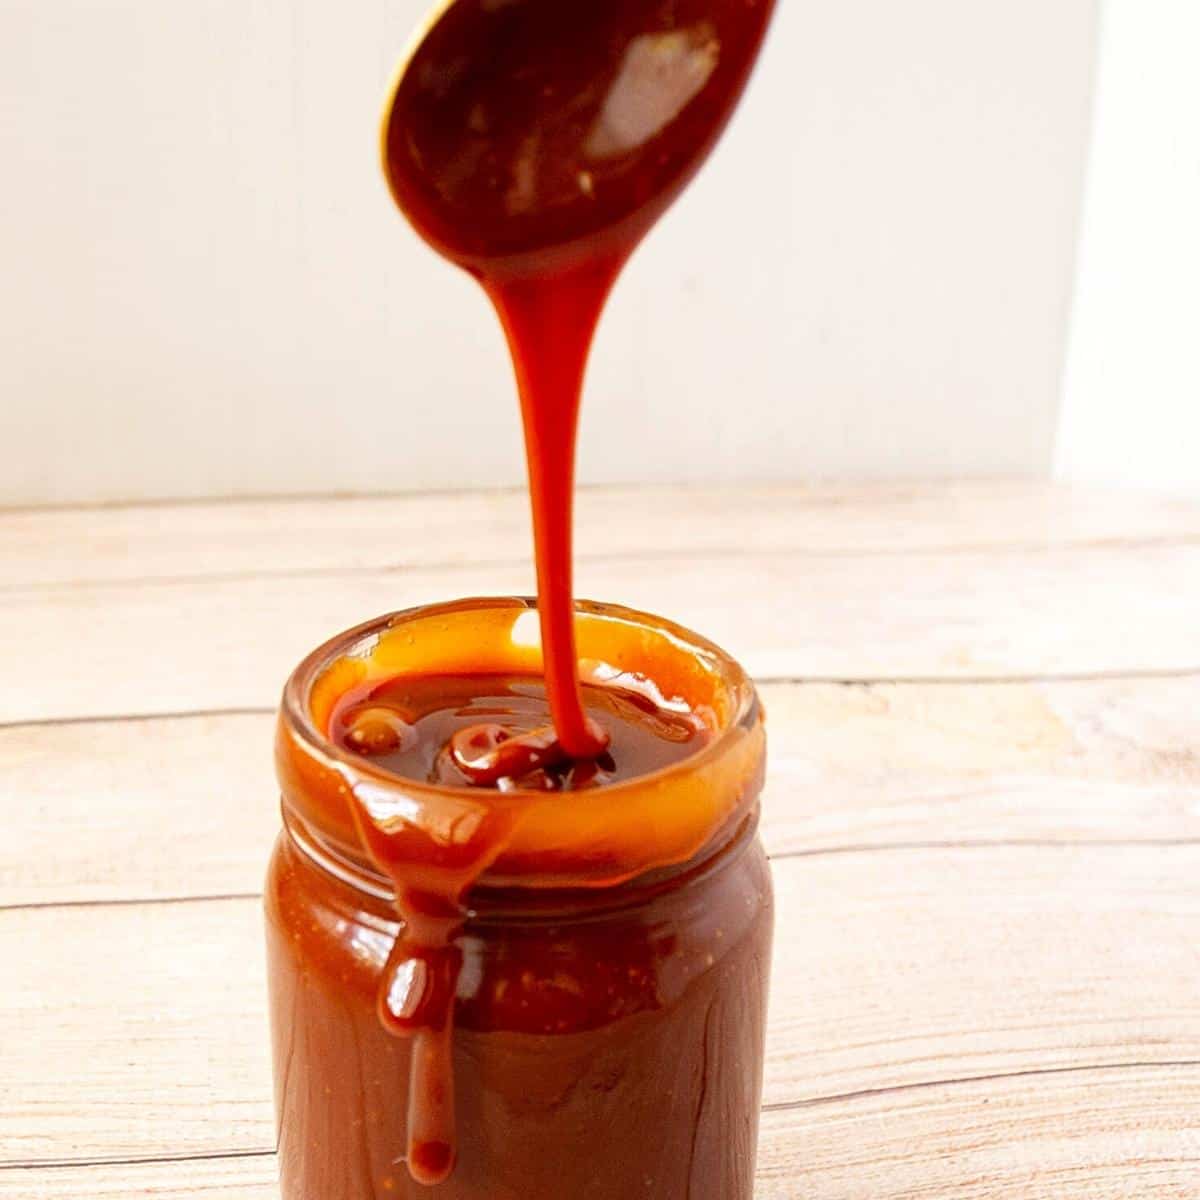 A mason jar and spoon with caramel sauce